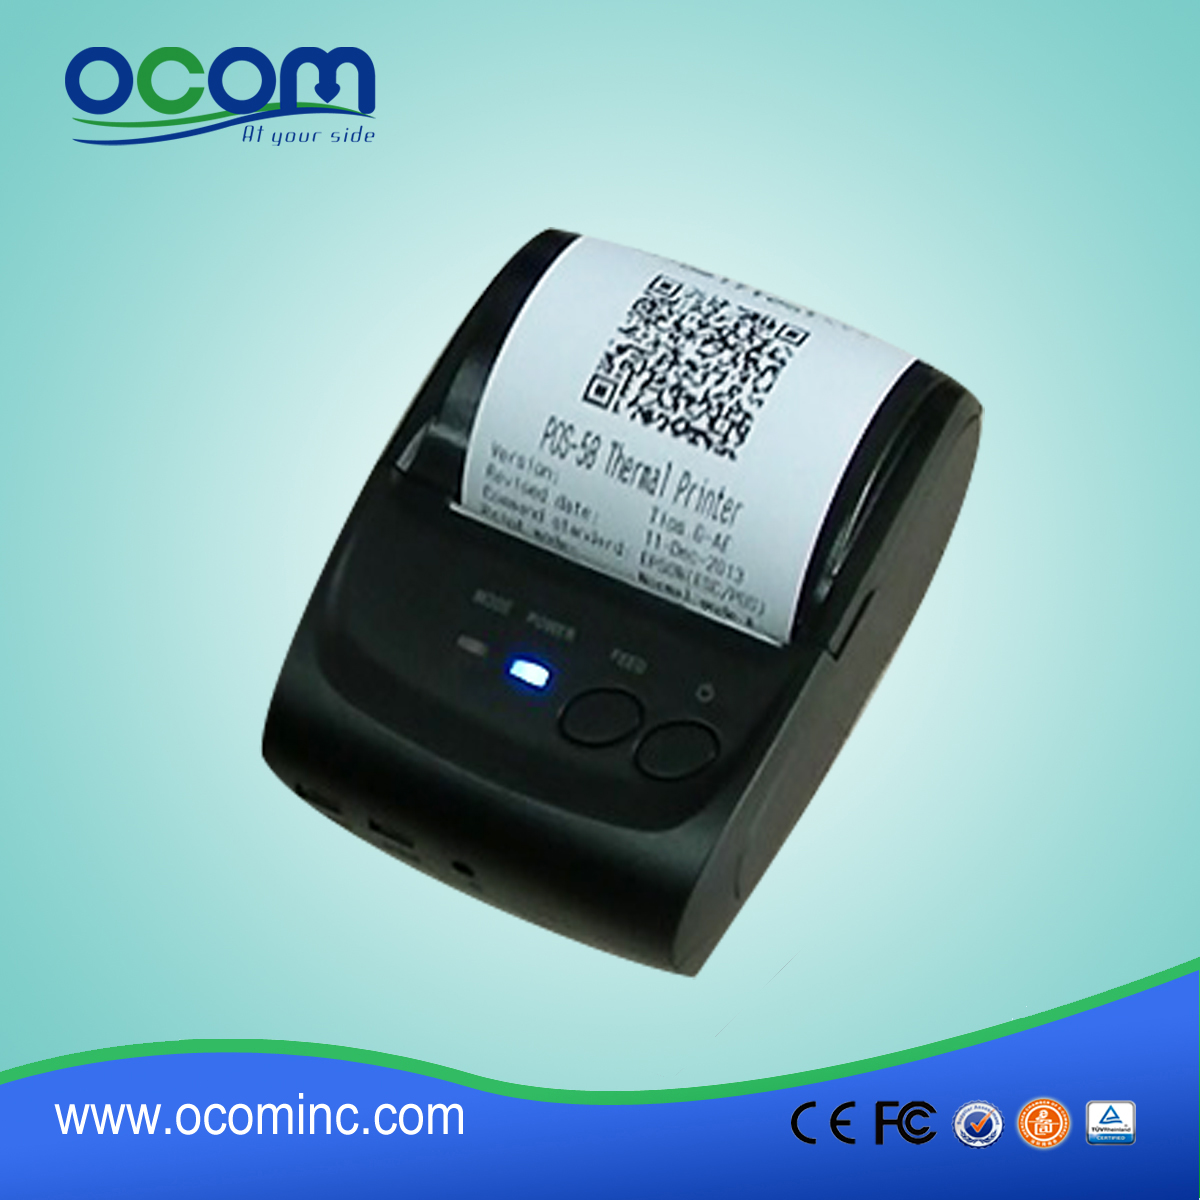 58 millimetri Android Portable USB Bluetooth Printer Termica - OCPP-M05